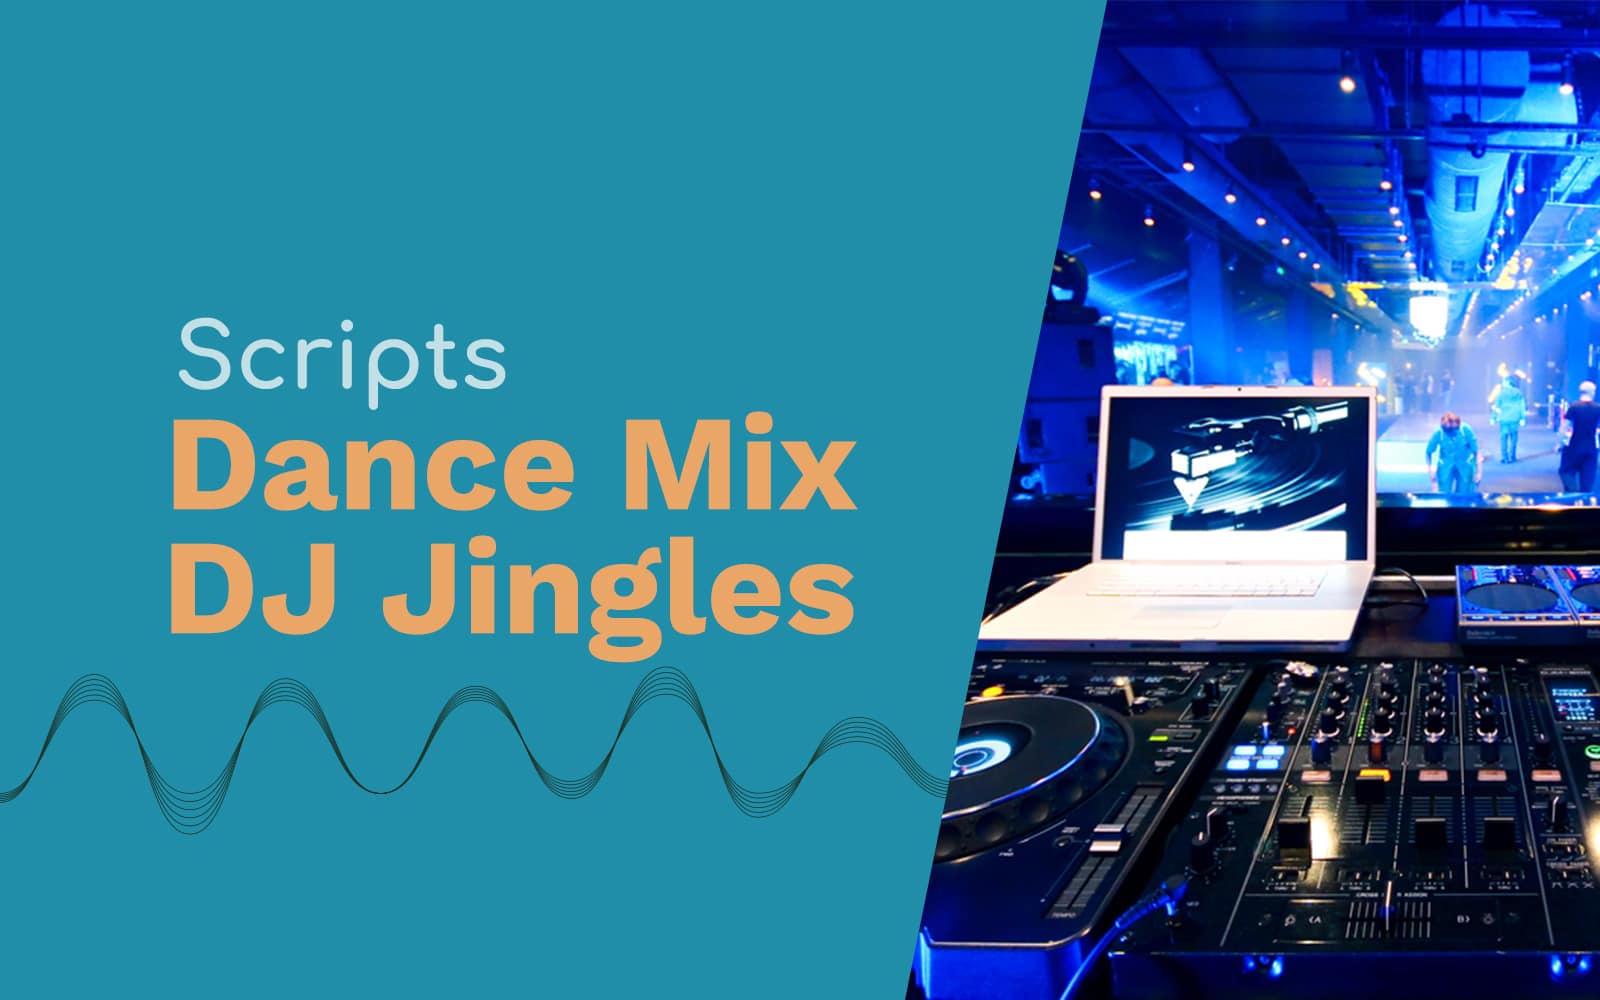 Scripts for Dance Mix DJ Jingles DJ Drops dance mix Music Radio Creative